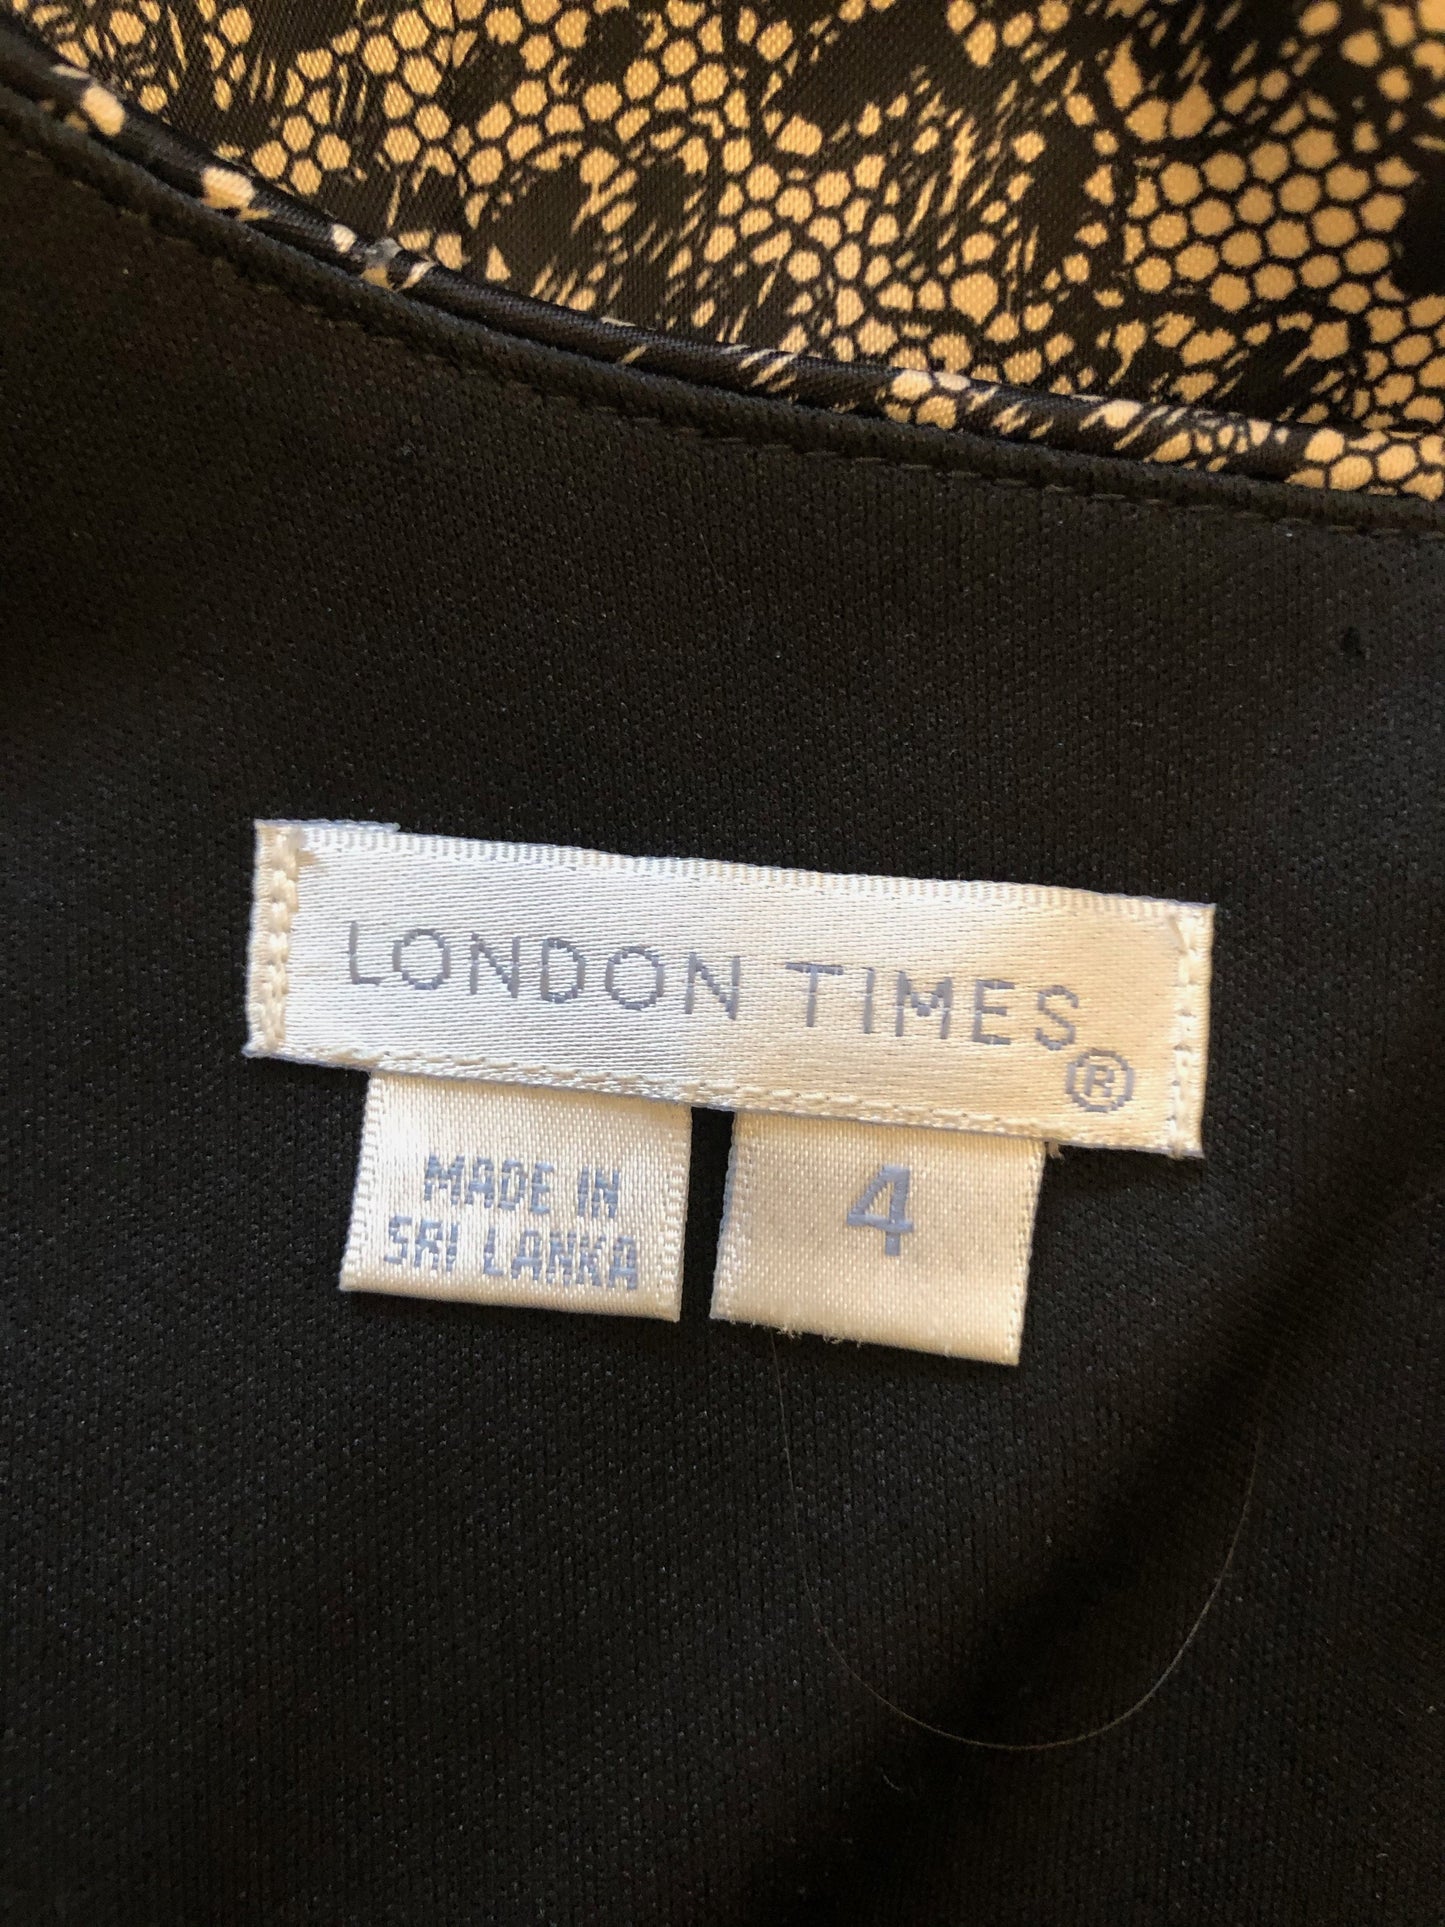 London Times Black & Cream Lace Print Soft Satin Dress UK 8 US 4 EU 36 Timeless Fashions